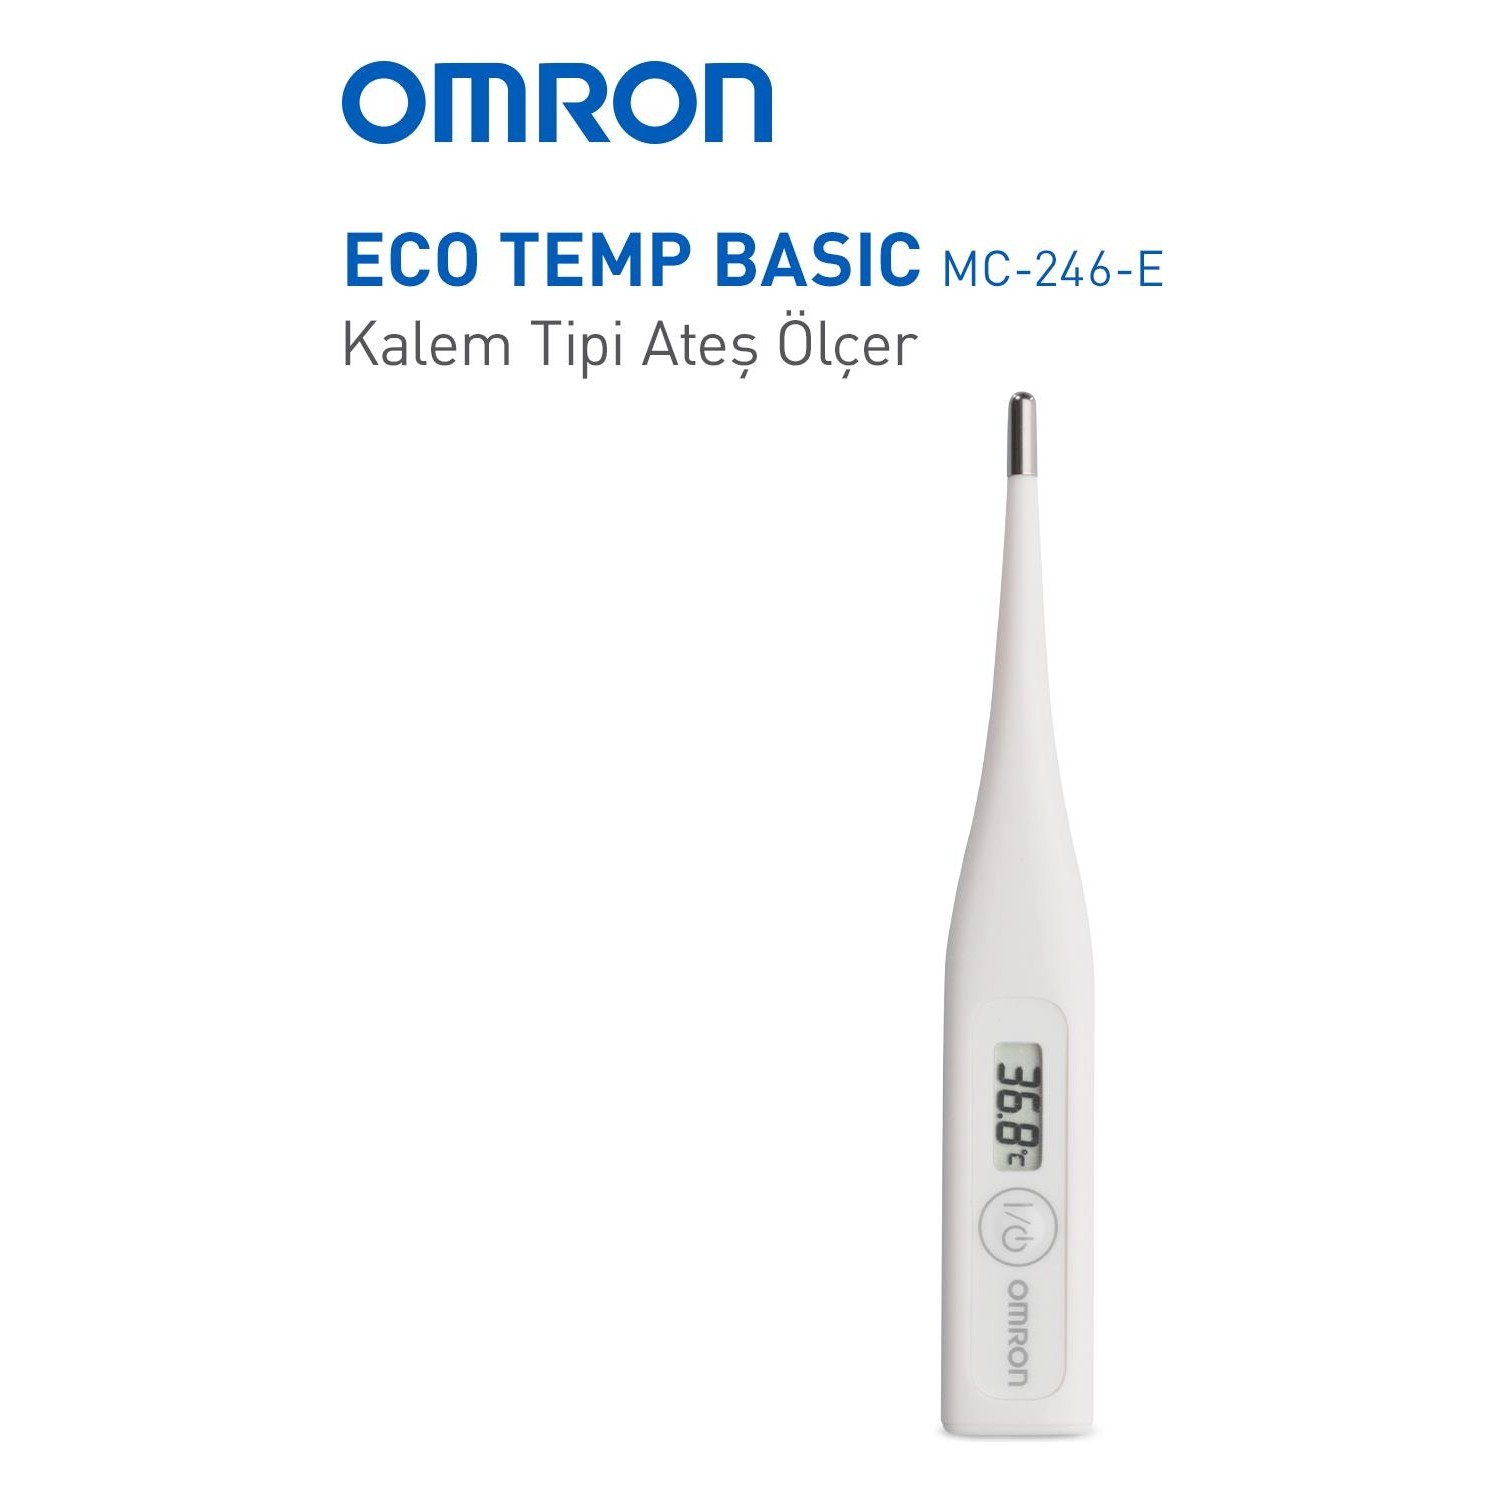 Медицинский цифровой термометр Omron MC-246 схема. Медицинский цифровой термометр Omron MC-246 схема электрическая. Omron eco temp basic